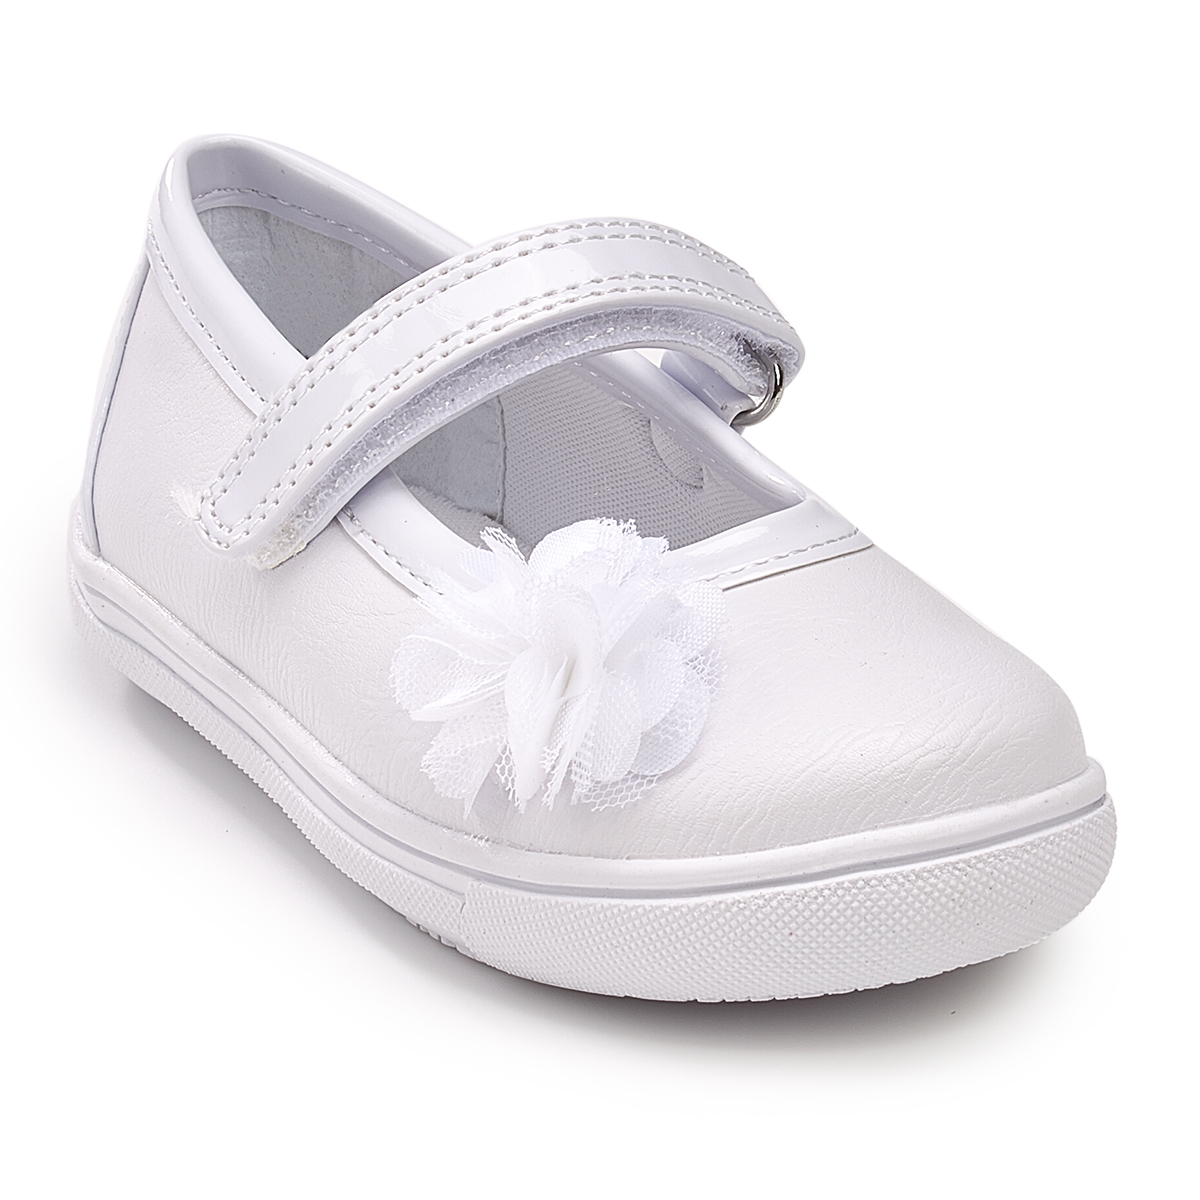 Rachel Shoes Toddler Girls' Giovanna Flower Mary Jane Flats - White, 10